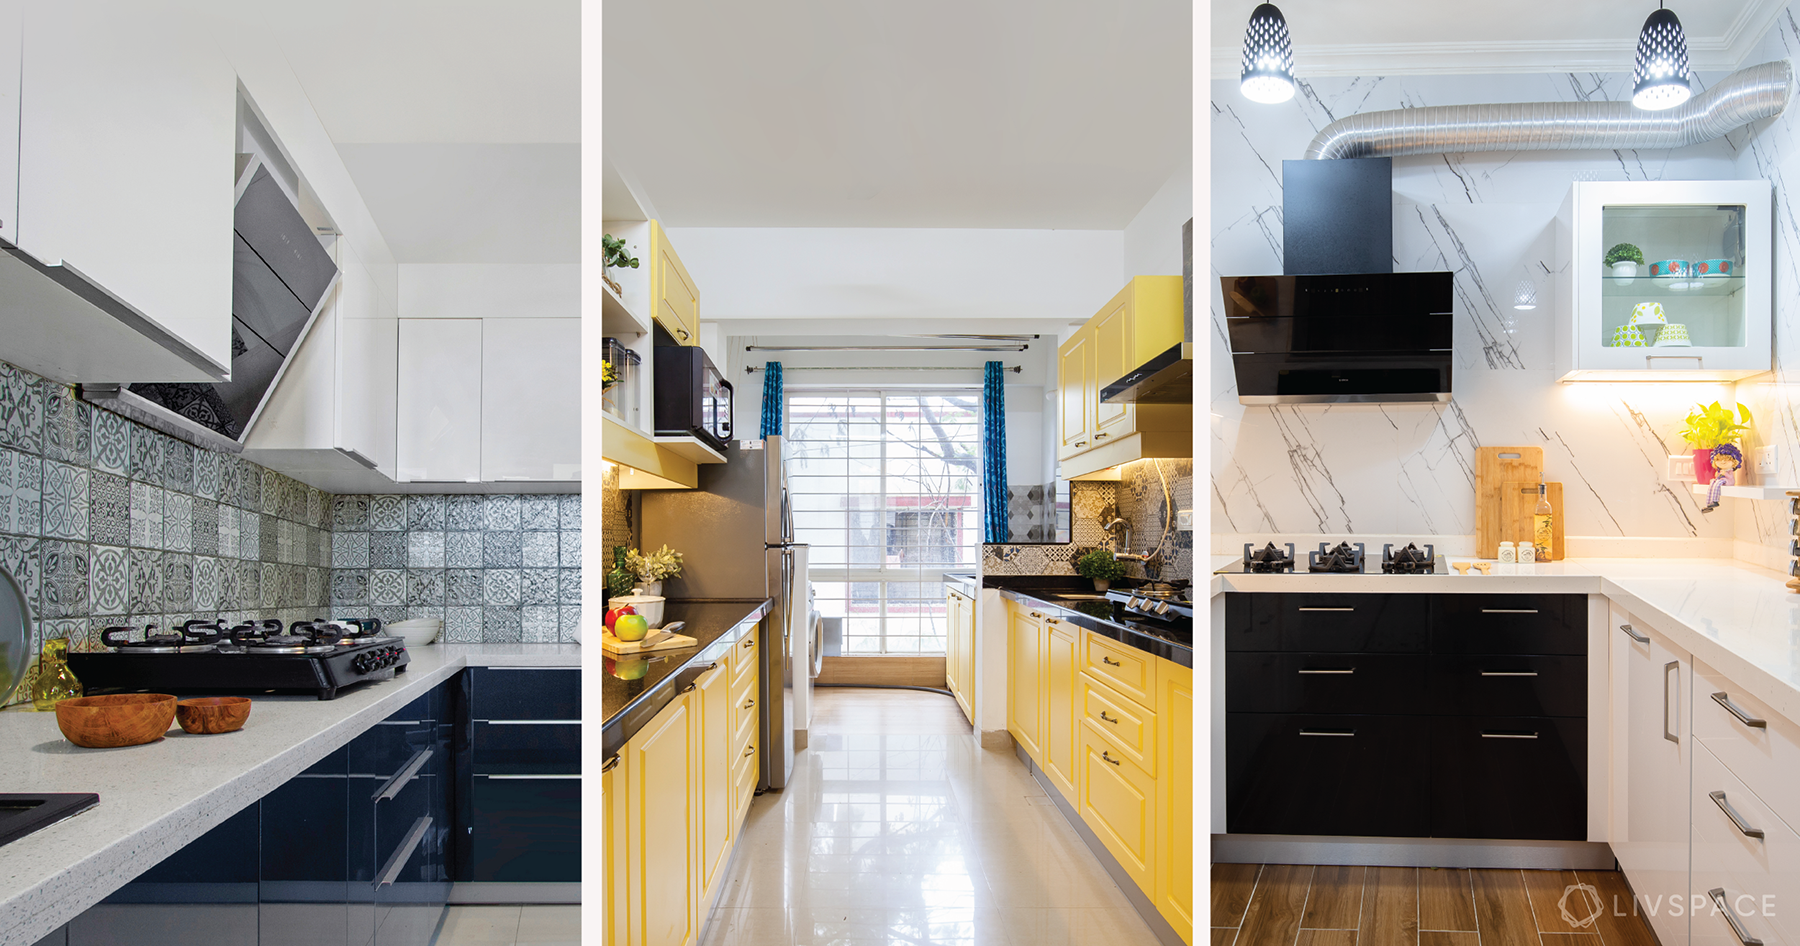 25 Stunning Small Kitchen Design Indian Style Ideas Under 250 sq. ft.